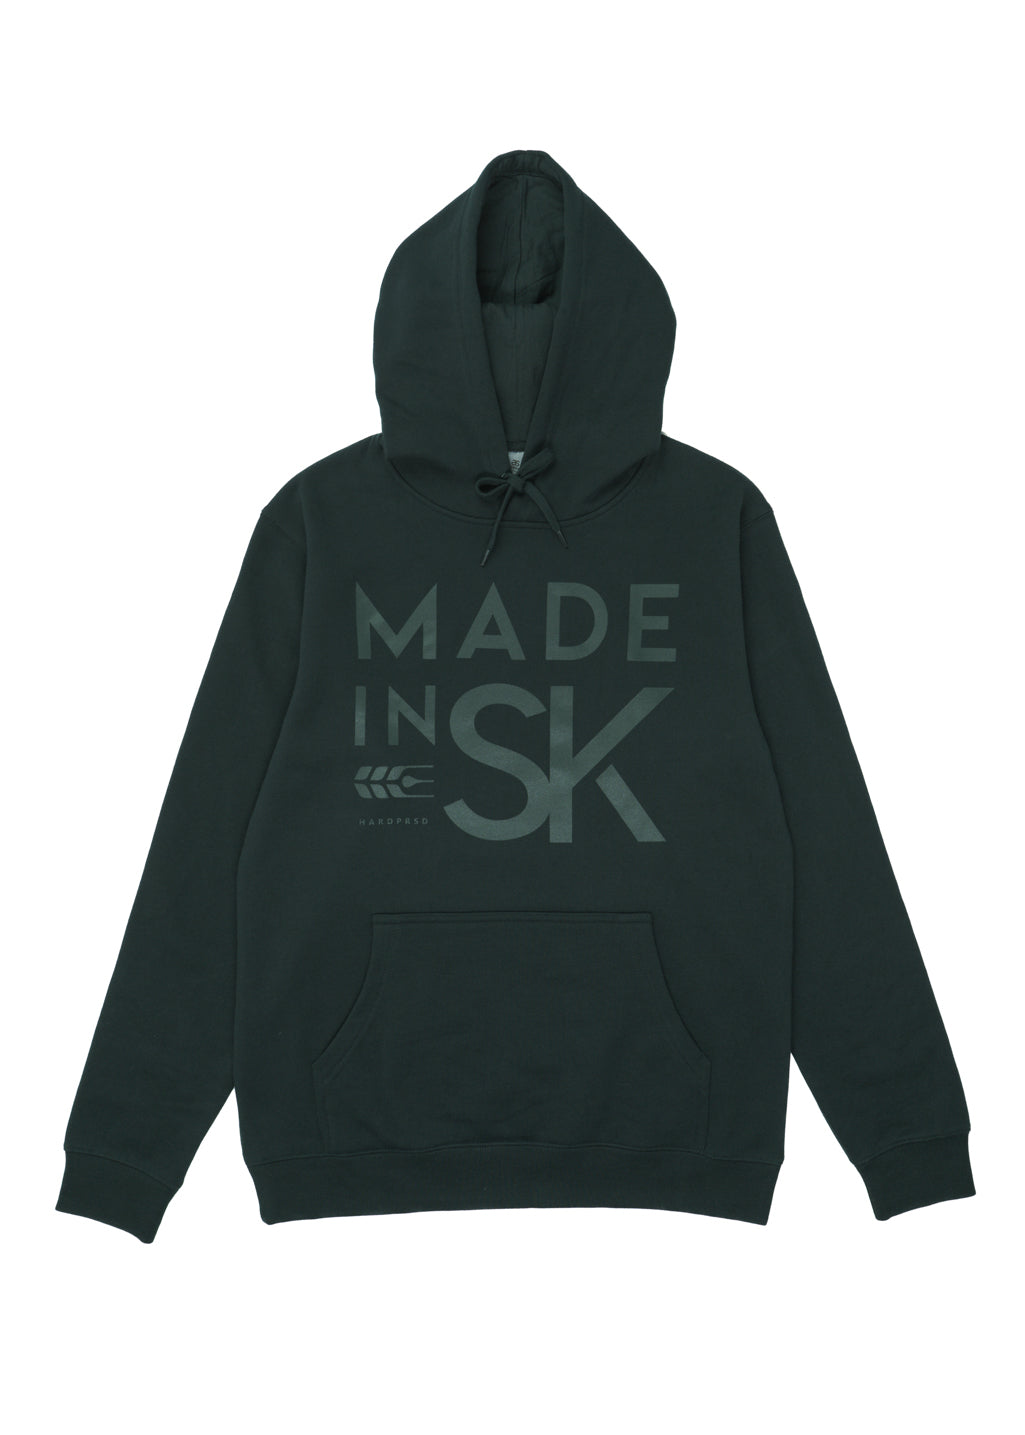 Made in SK Sweater | Boreal | Unisex - Hardpressed Print Studio Inc.